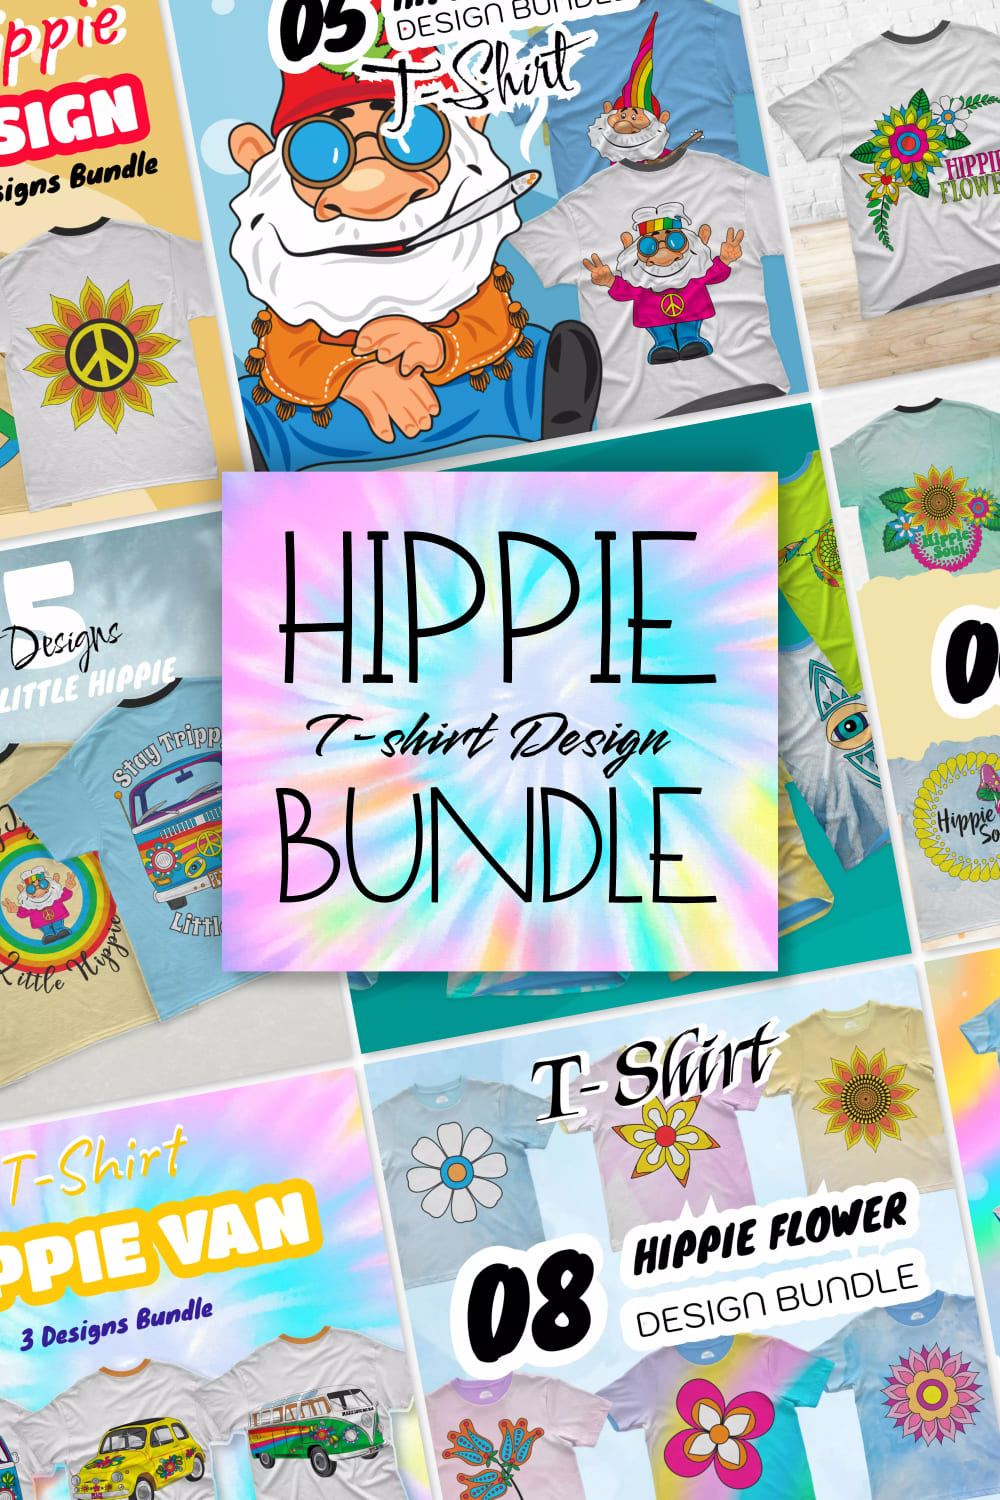 Hippie T-shirt Design Bundle - Pinterest.